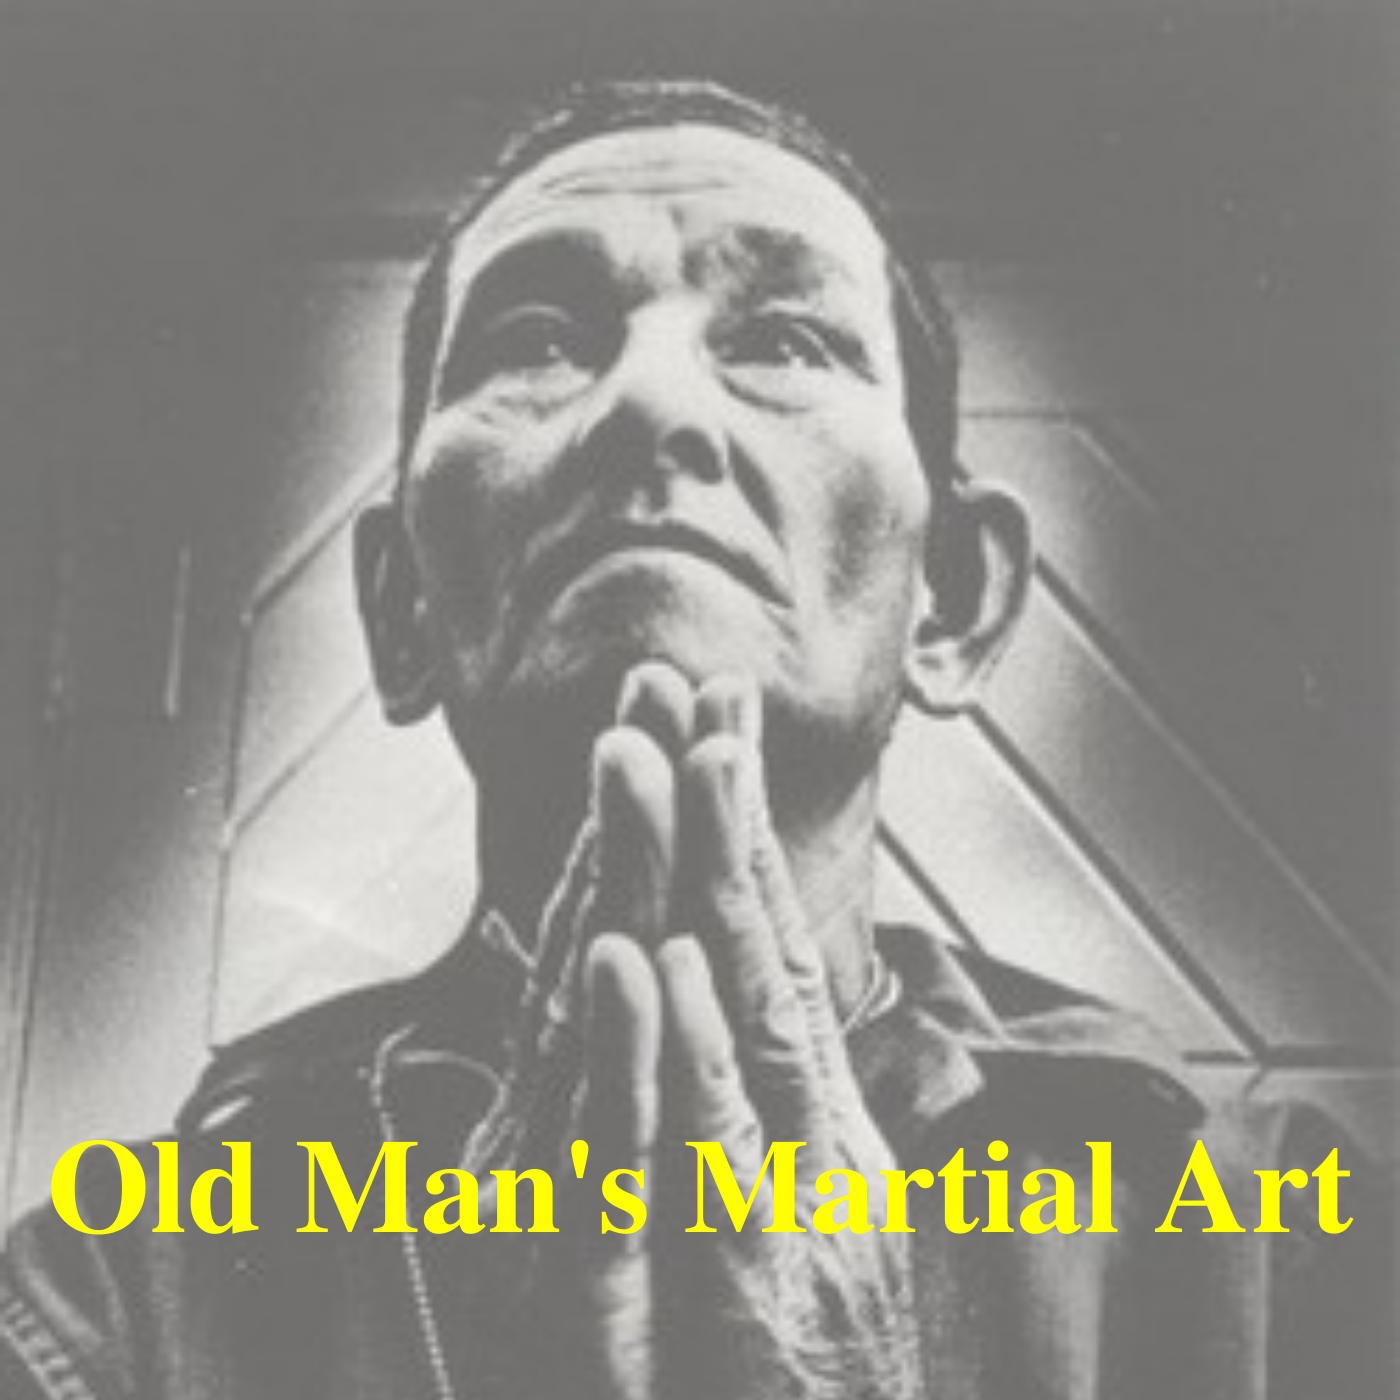 Old Man's Martial Art